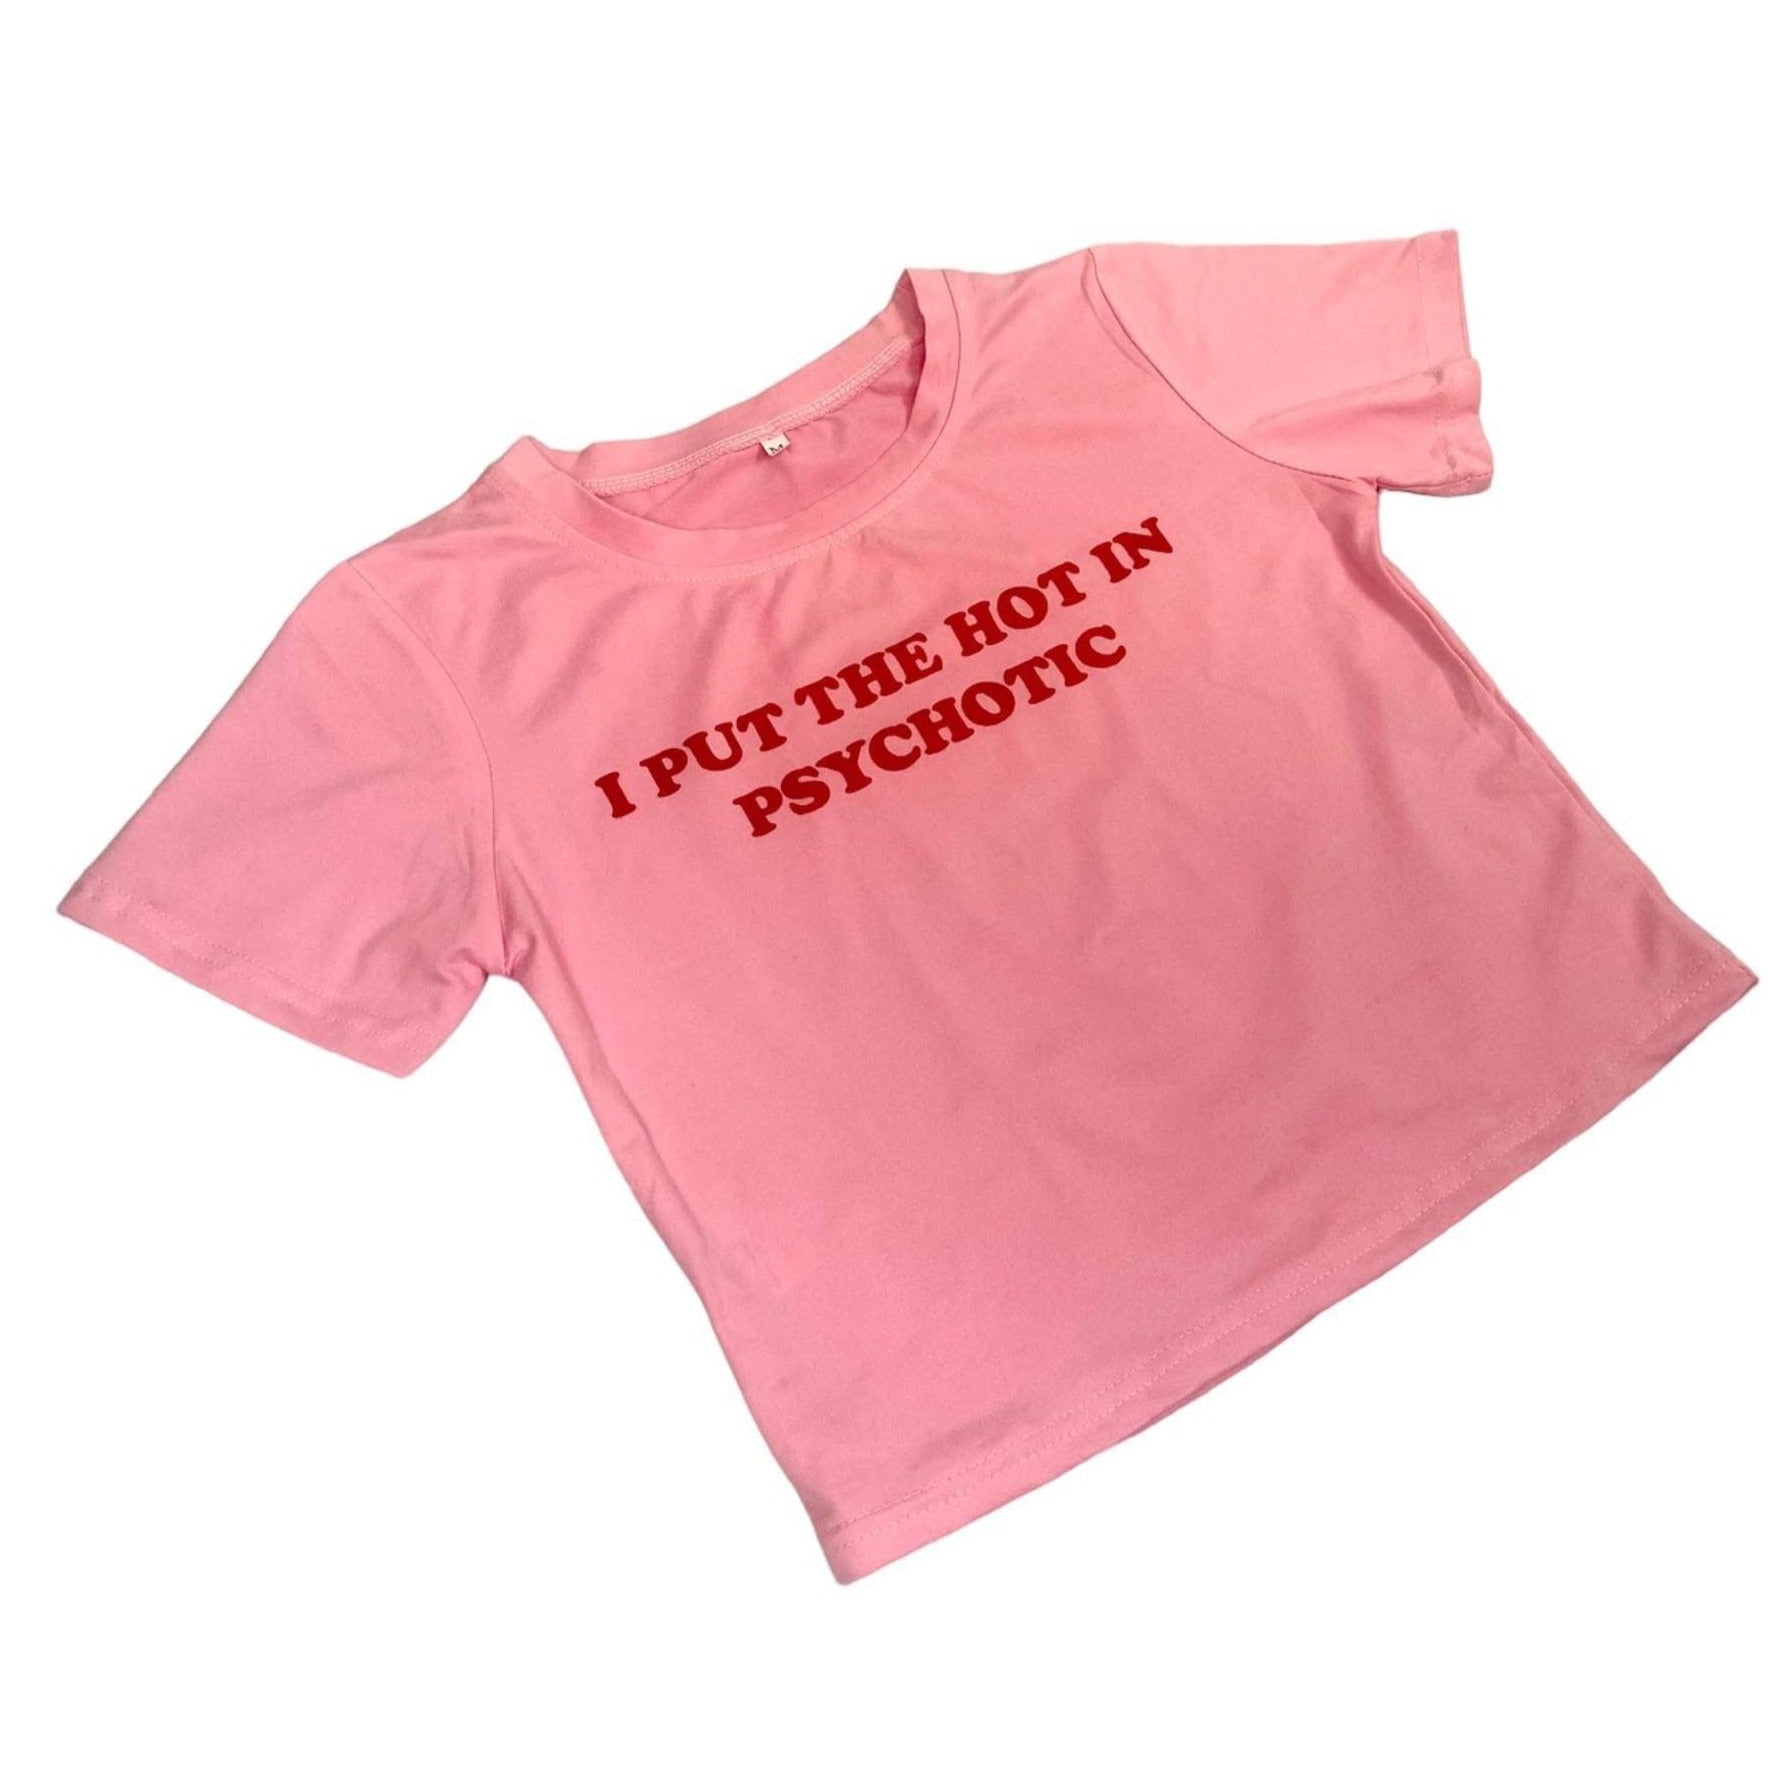 Women's Psychotic Hottie Baby Tee - Baebekillinem Boutique - Polyester- Pink/ Red